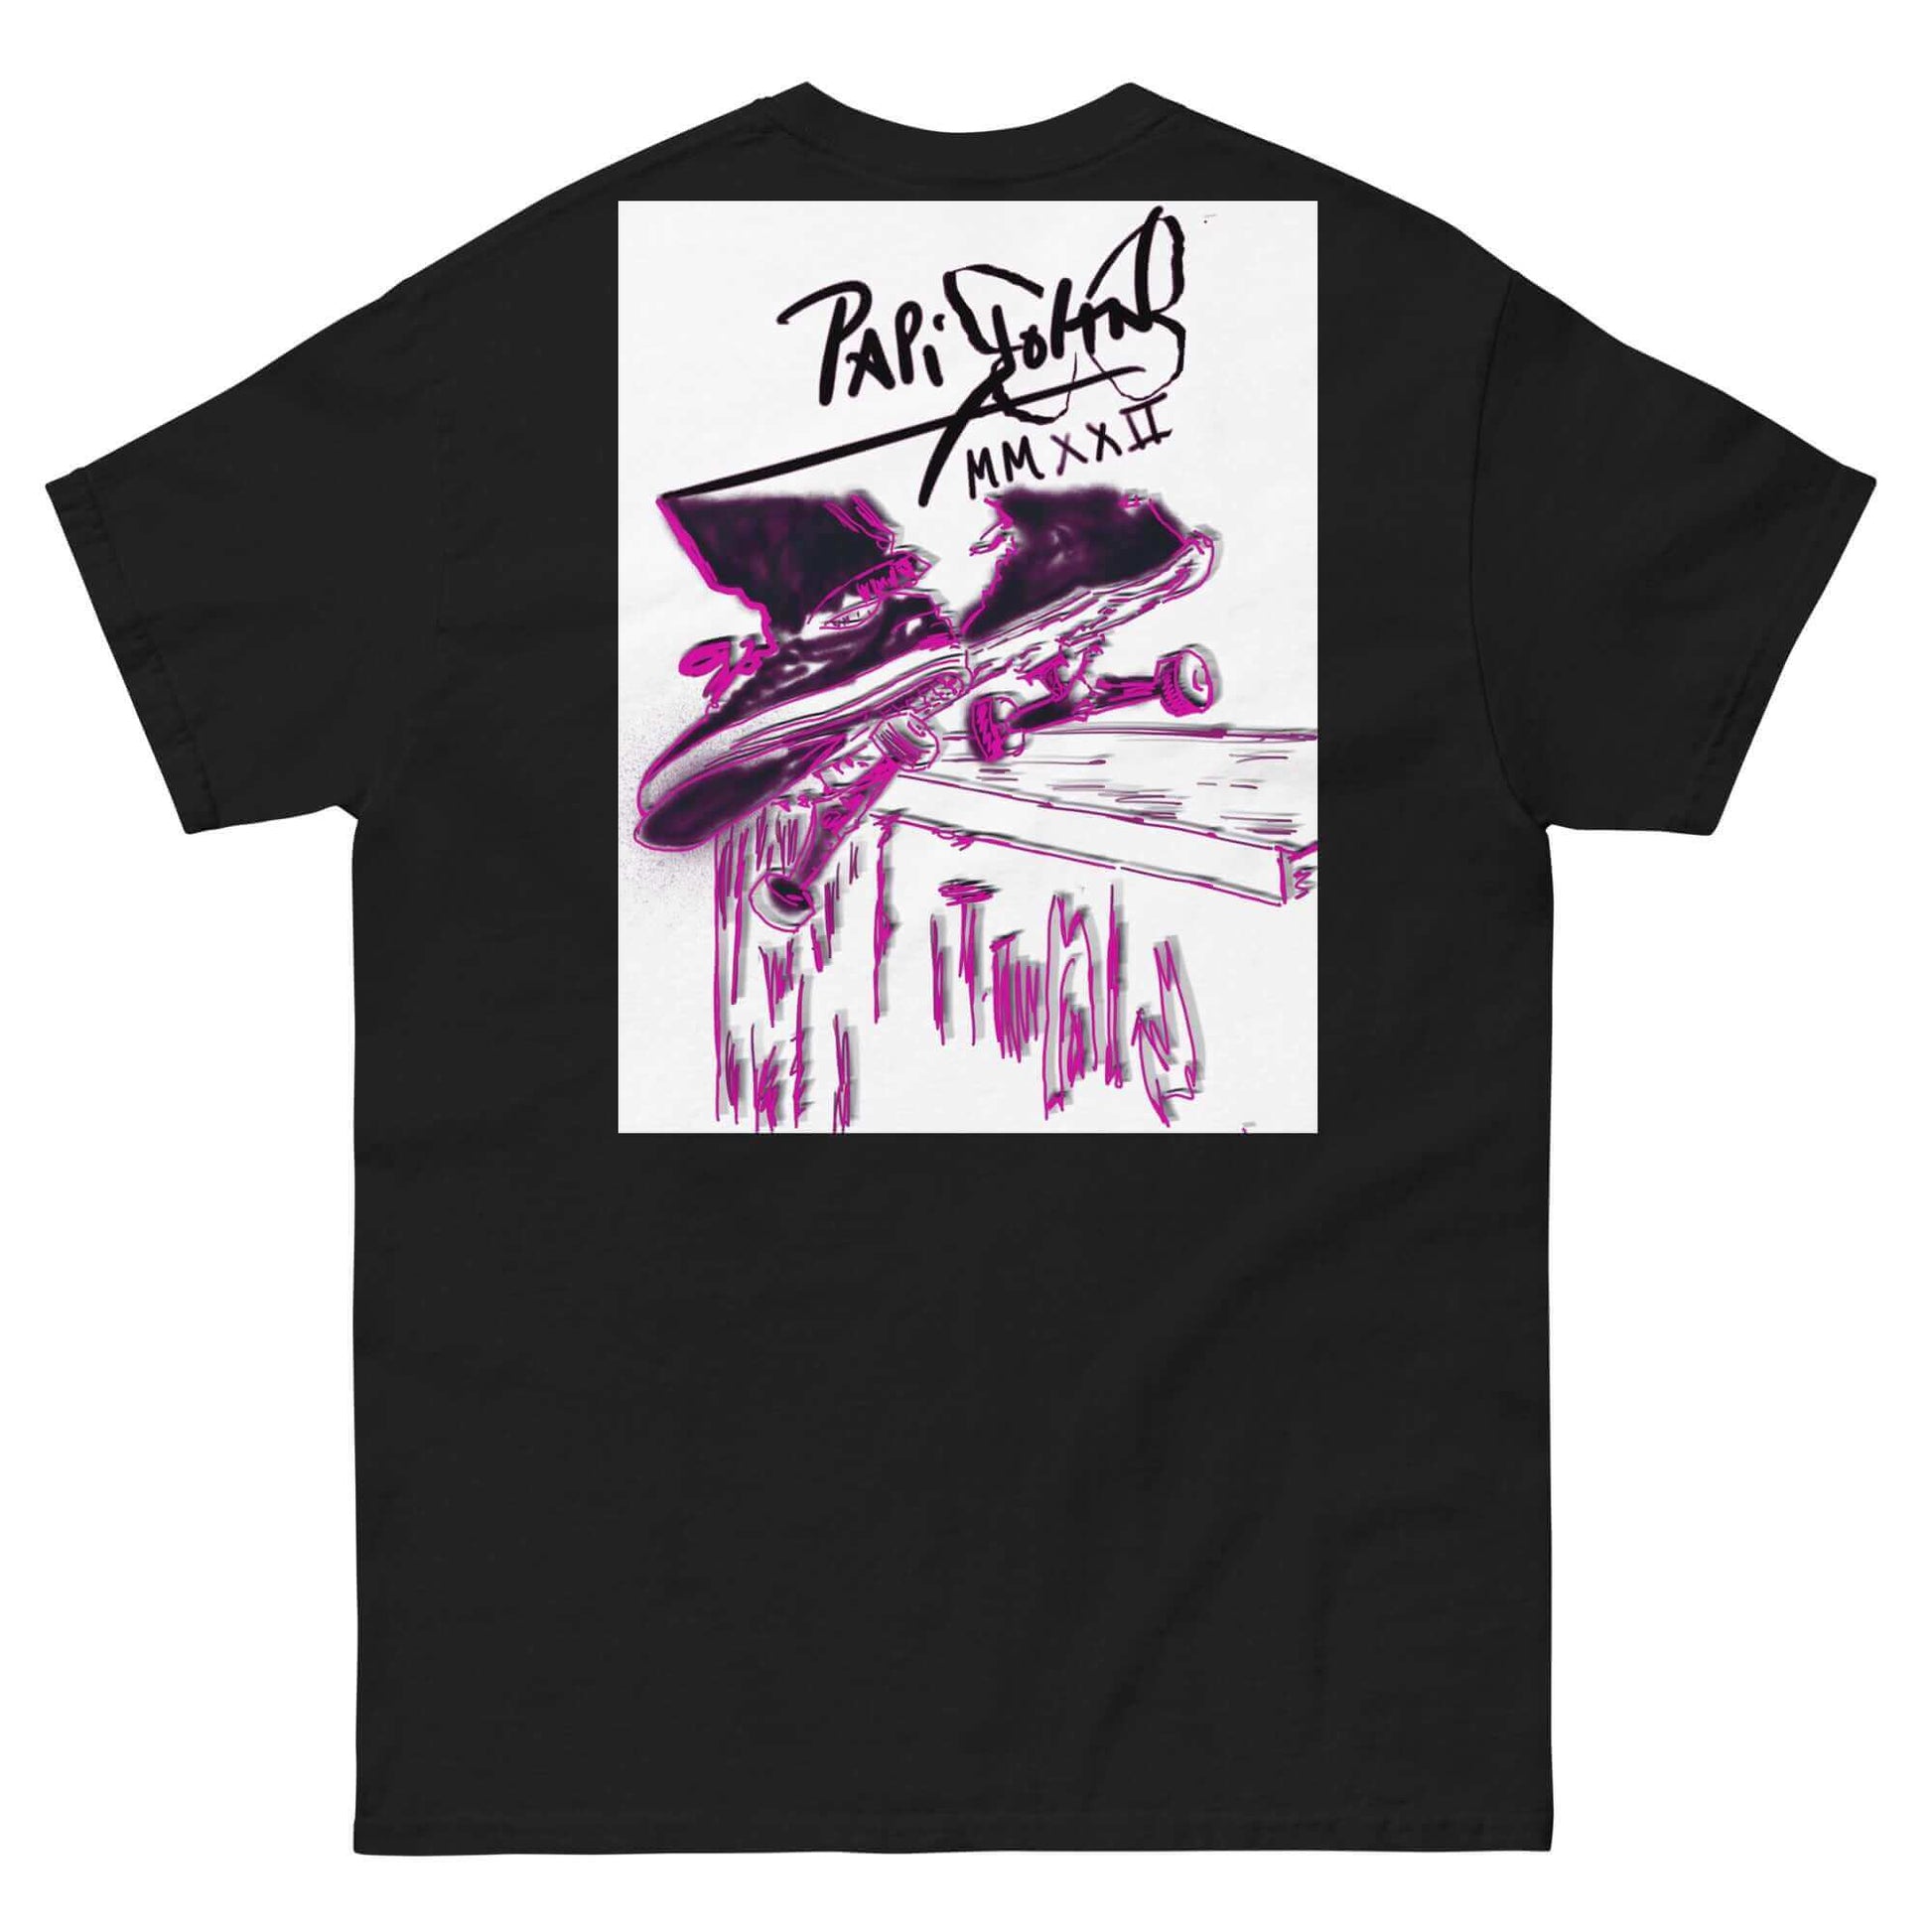 Camiseta skate negra graffiti pies firma papijohn